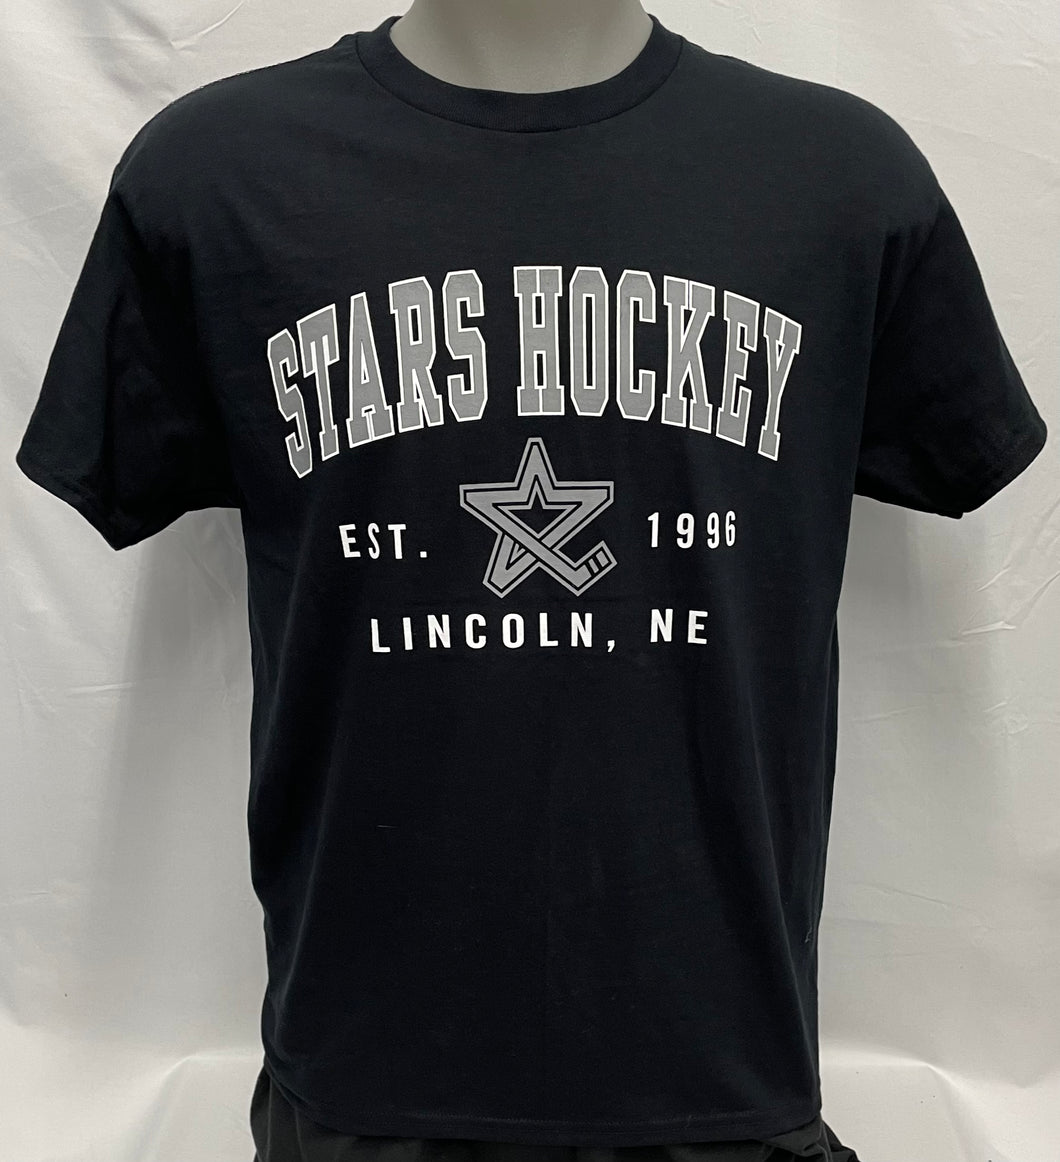 Black Stars Hockey Est 1996 Lincoln, NE T-shirt